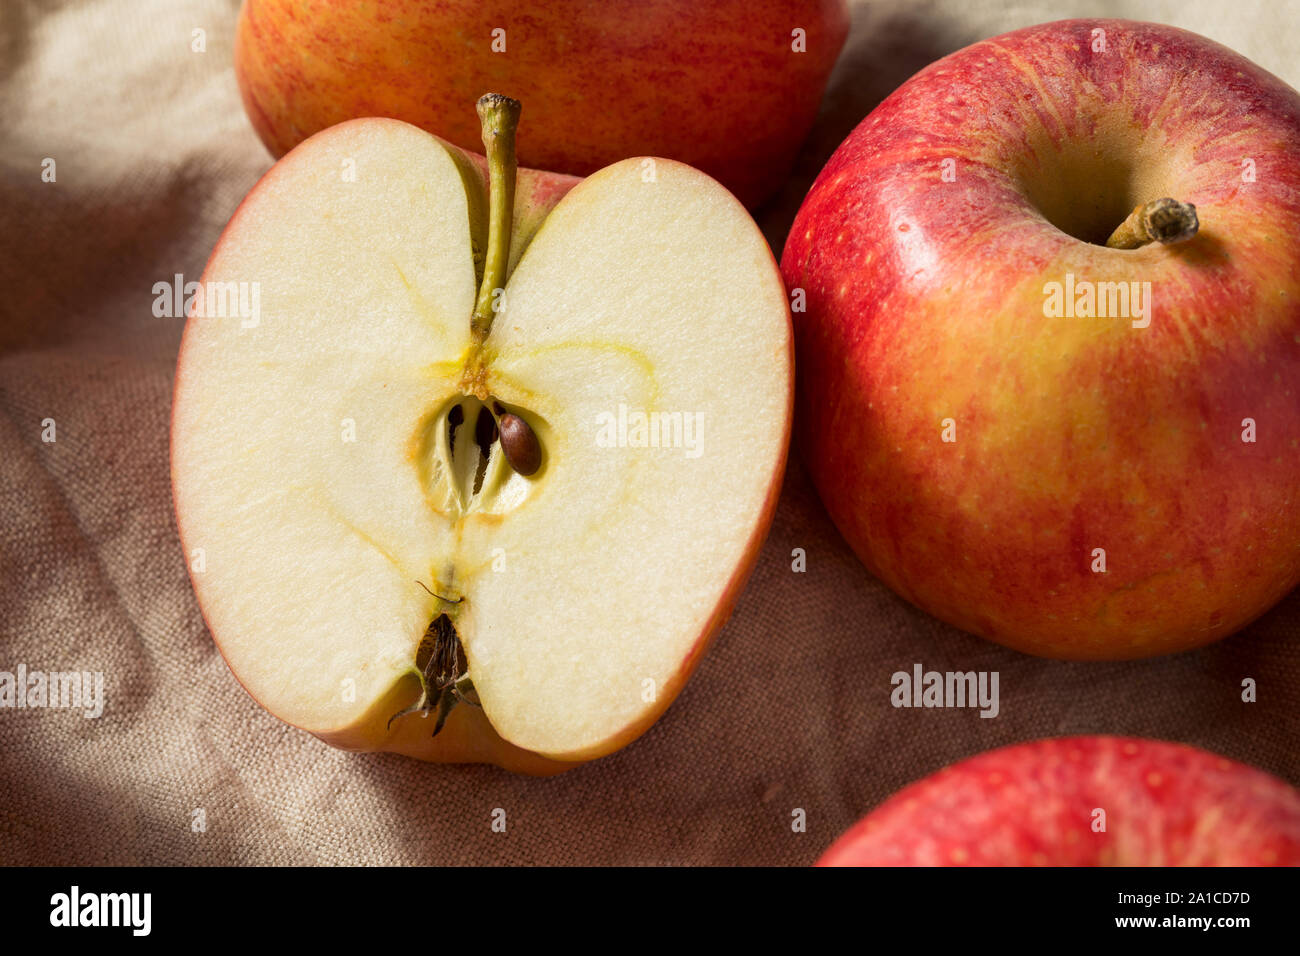 https://c8.alamy.com/comp/2A1CD7D/raw-red-organic-gala-apples-ready-to-eat-2A1CD7D.jpg